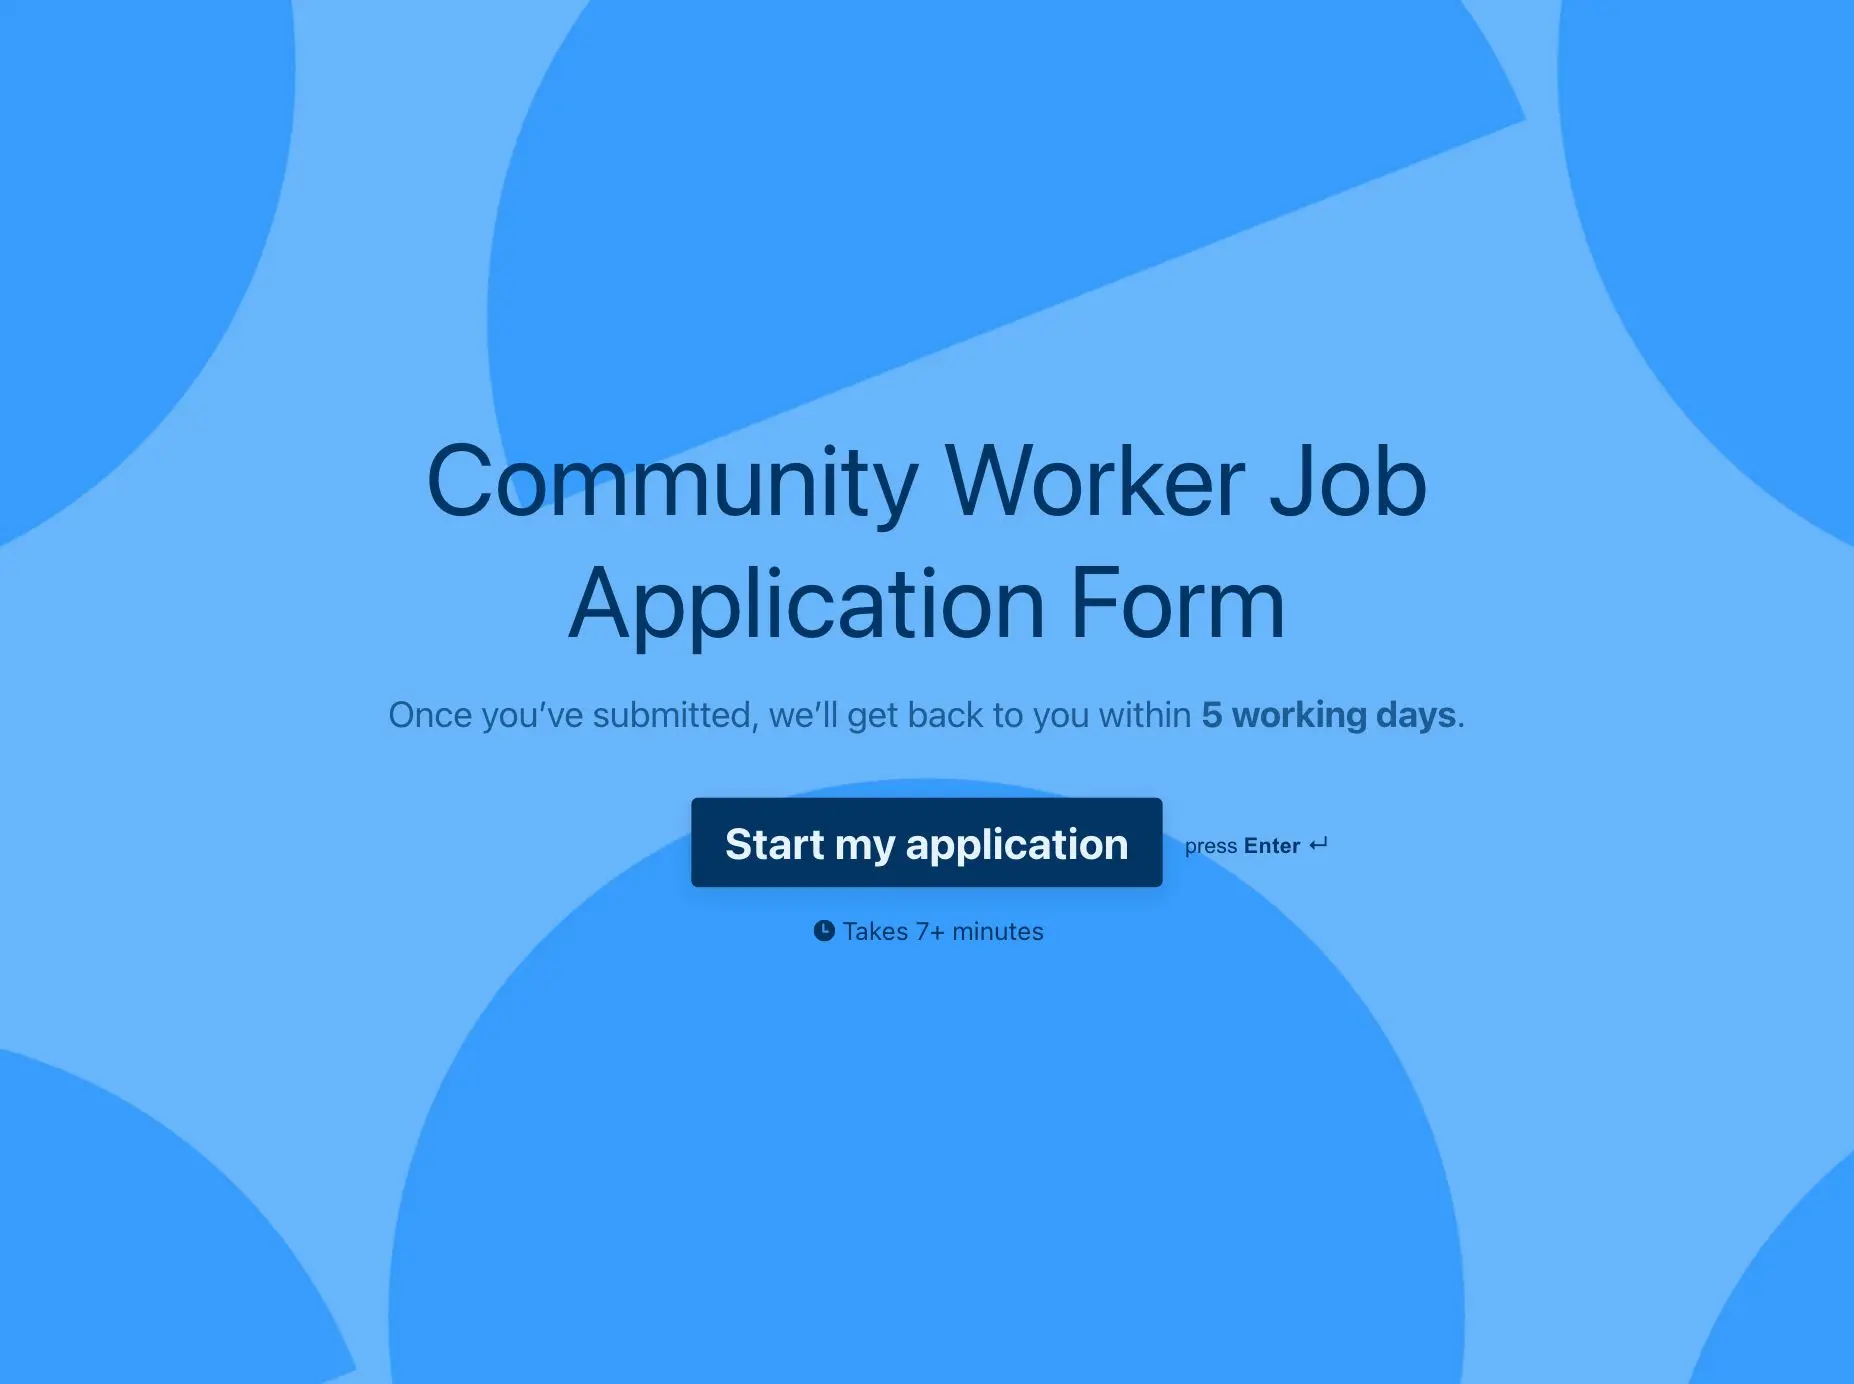 Community Worker Job Application Form Template Hero